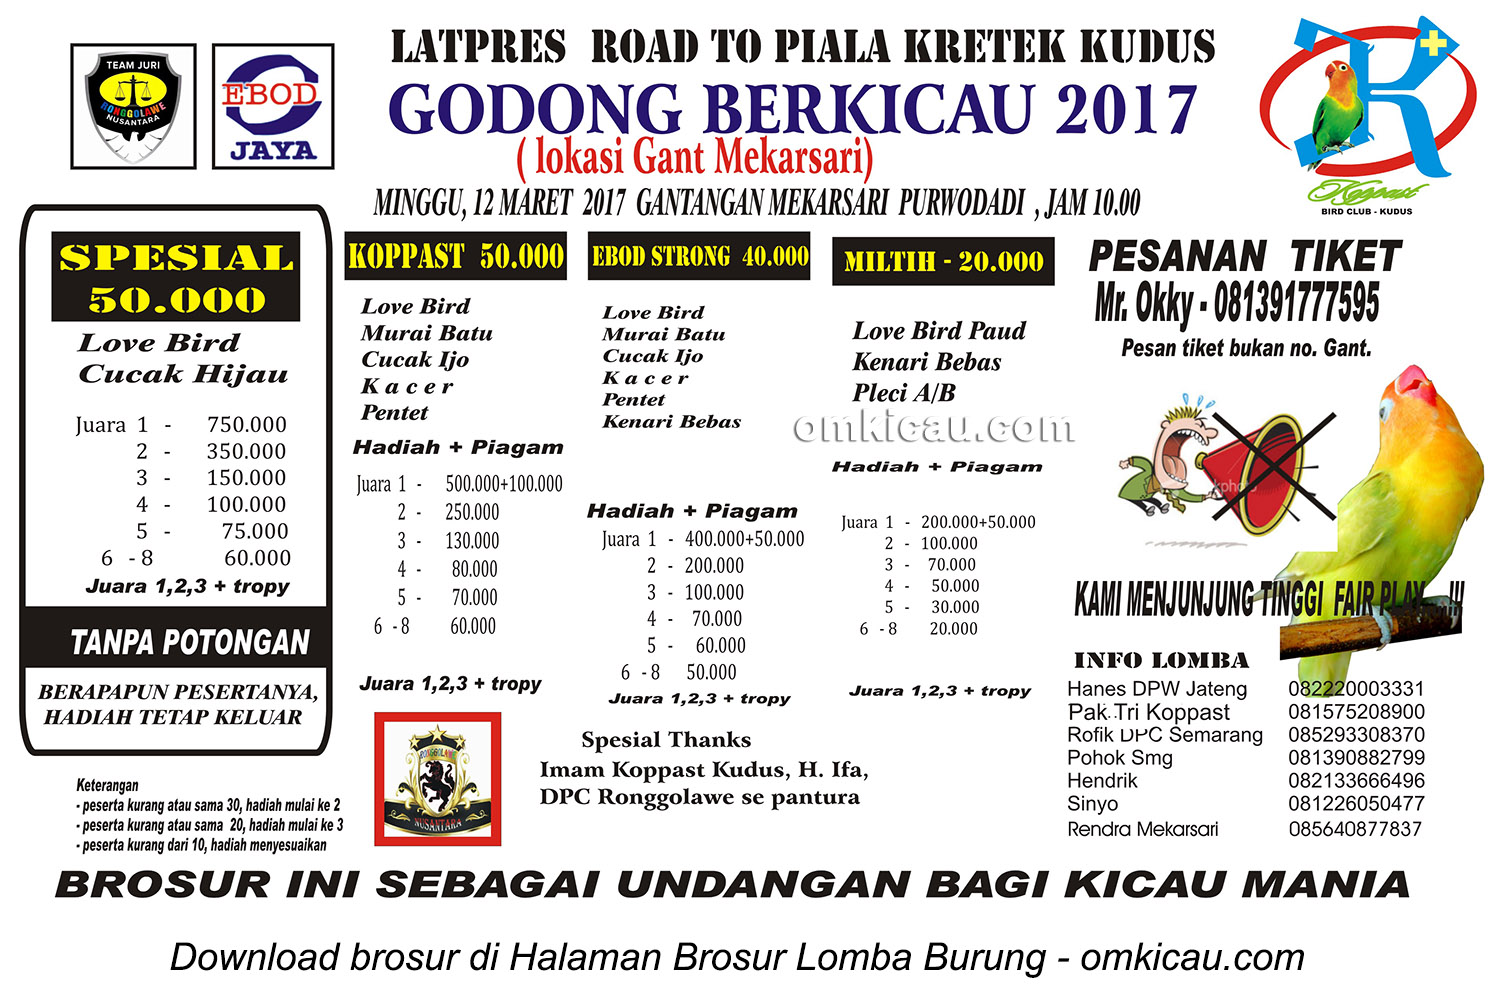 Brosur Latpres Godong Berkicau - Road to Piala Kretek, Purwodadi, 12 Maret 2017